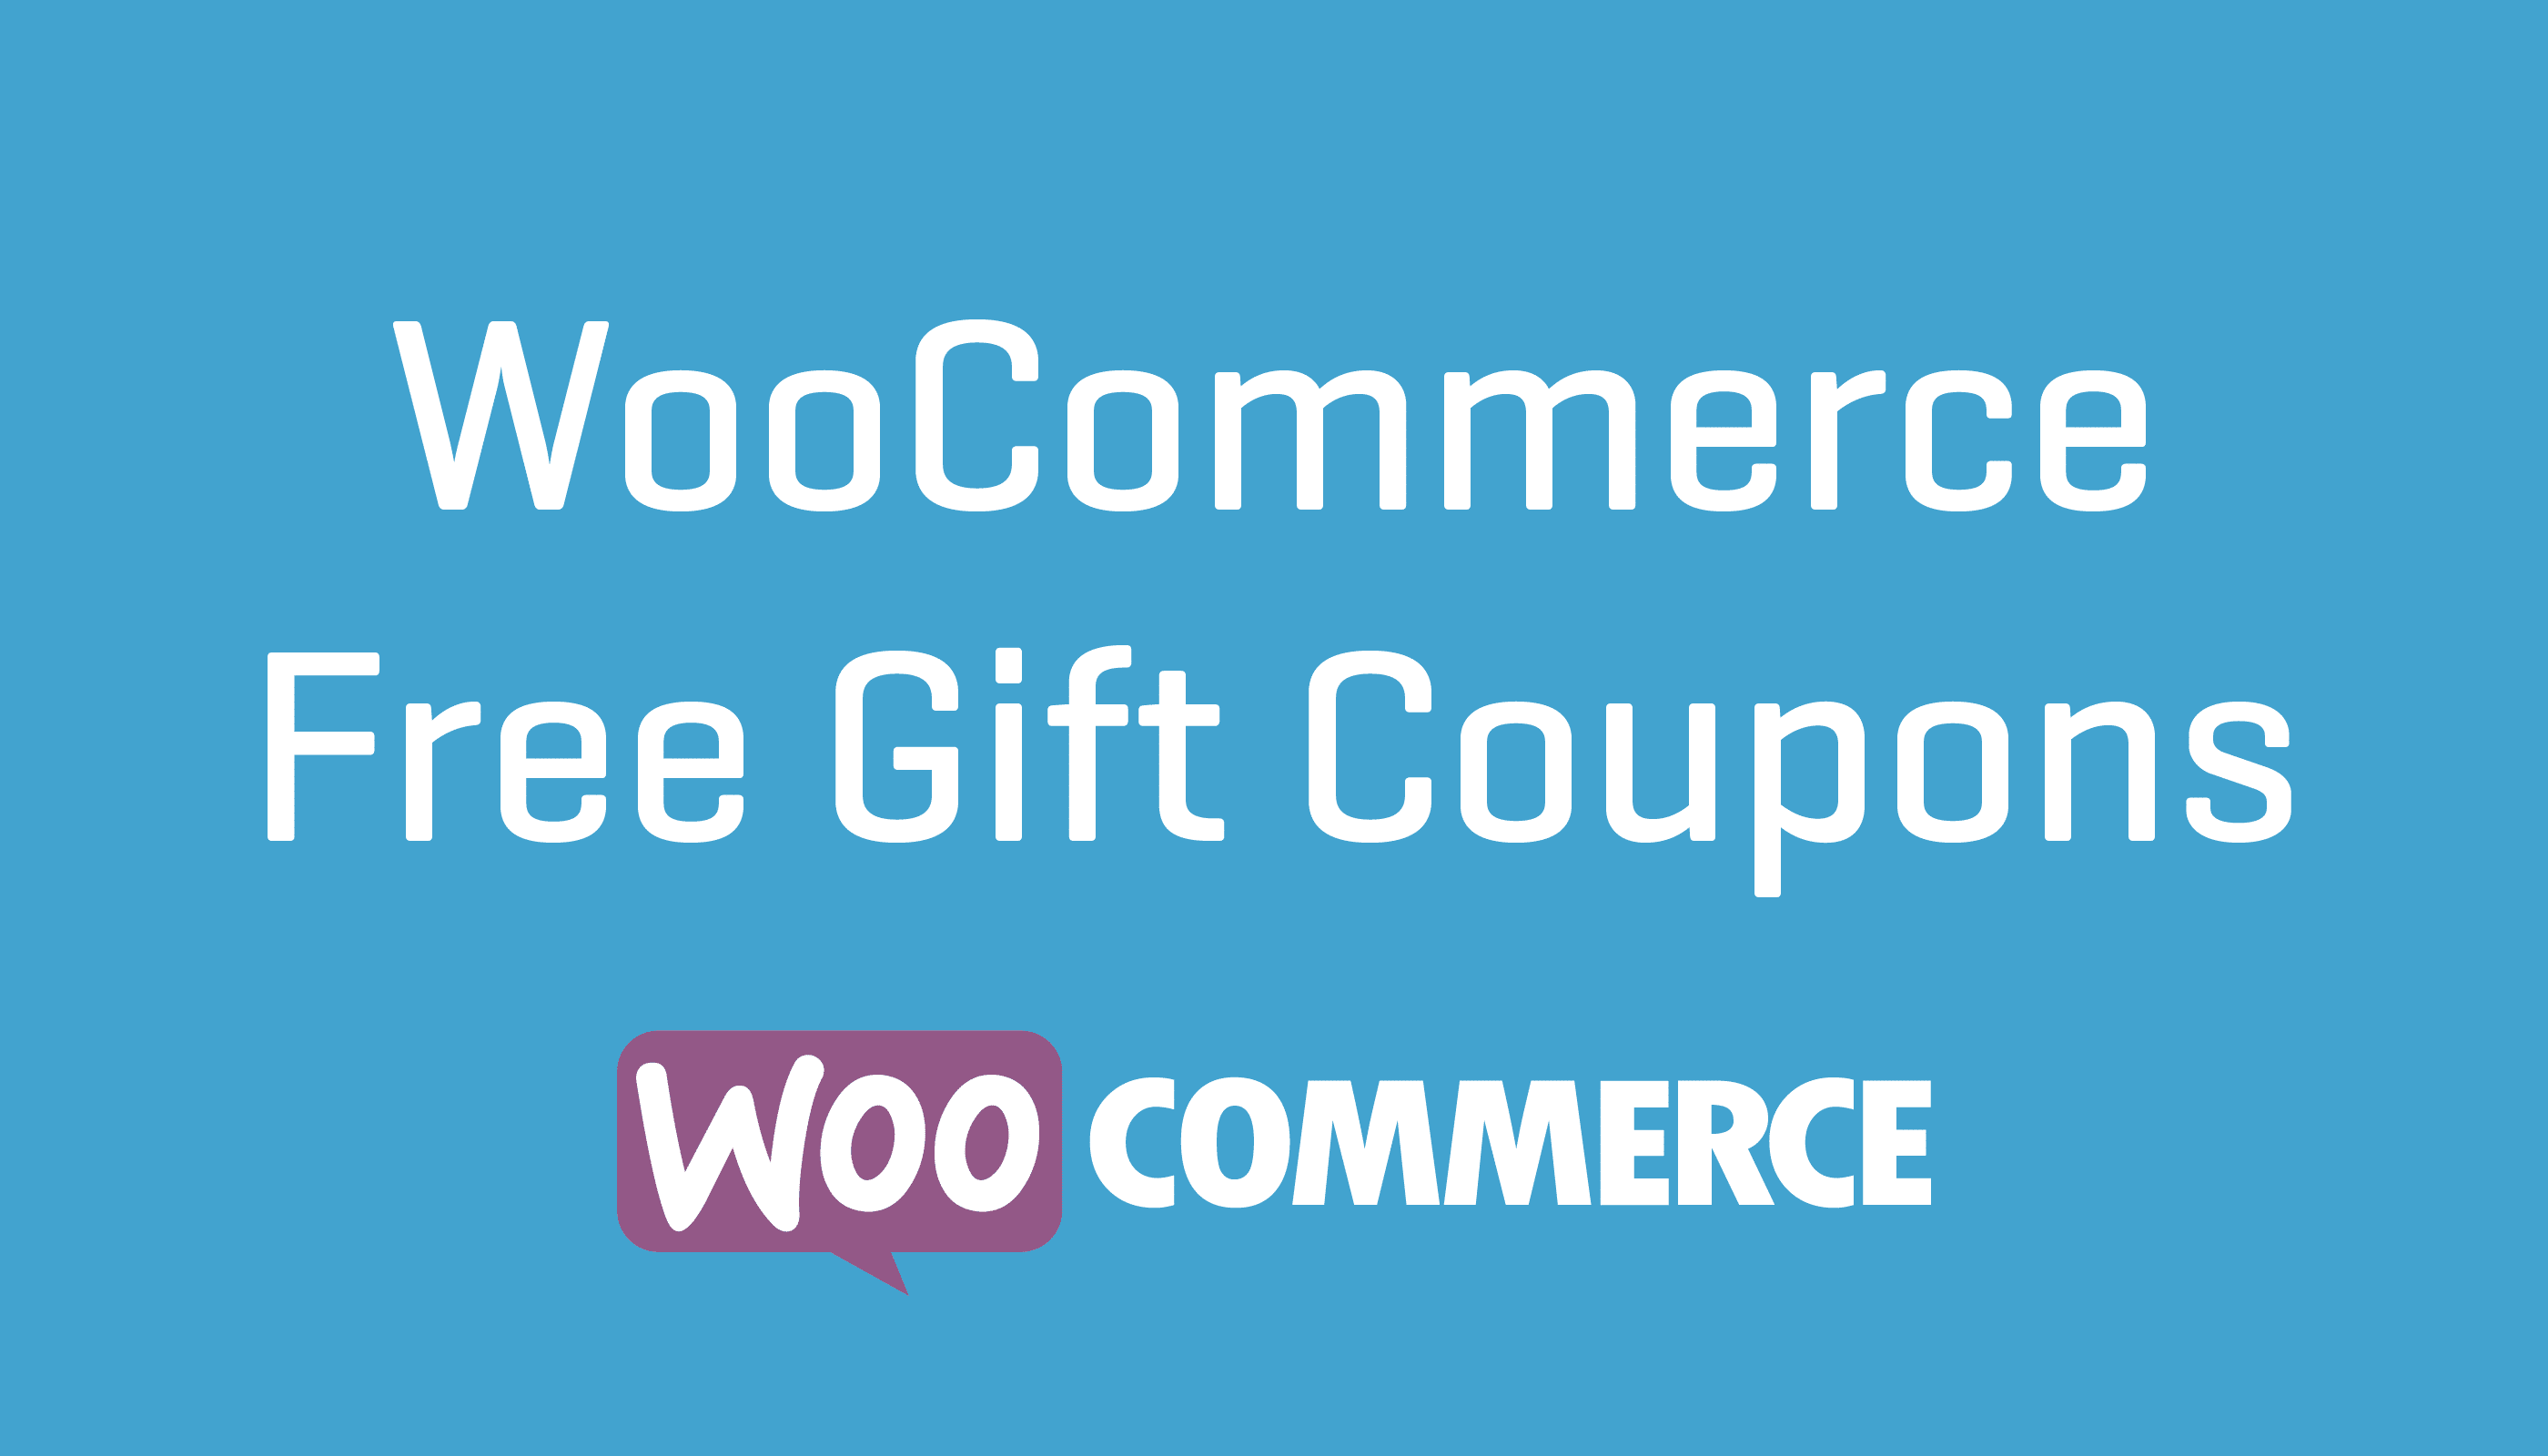 Woocommerce Free Gift Coupons - WooCommerce Free Gift Coupons v3.6.0 by Woocommerce Nulled Free Download